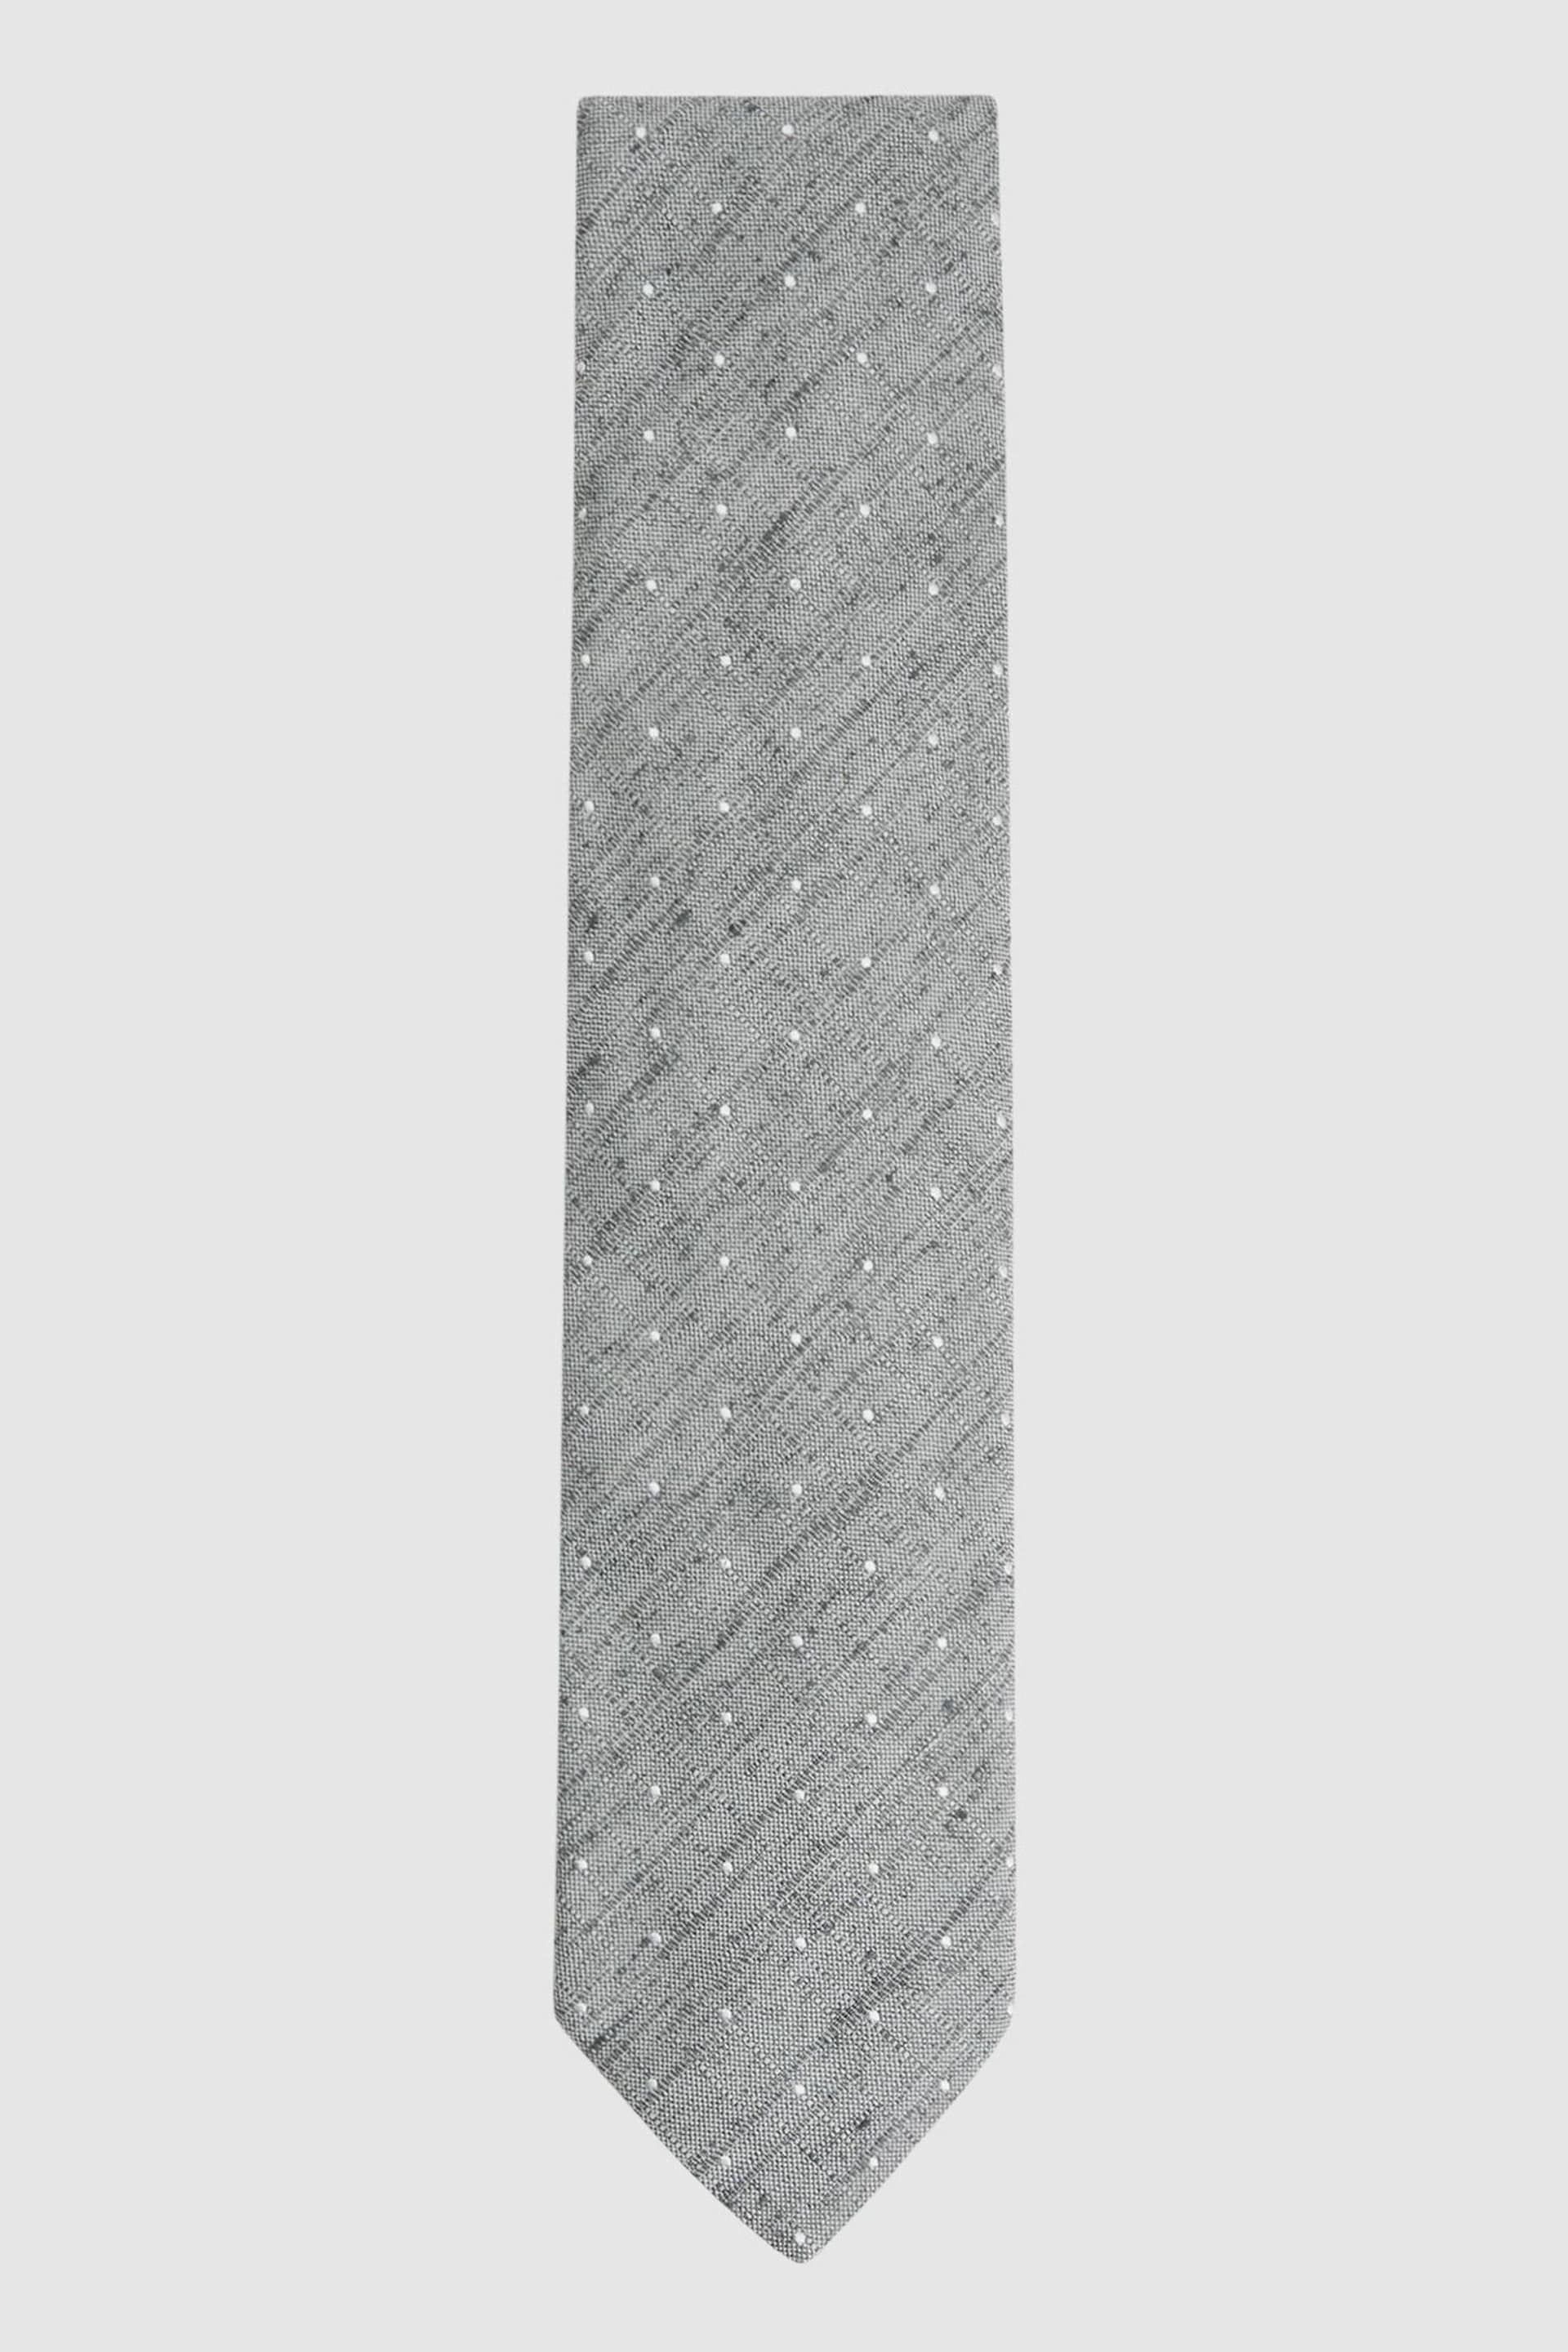 Reiss Soft Grey Levanzo Silk Textured Polka Dot Tie - Image 1 of 5